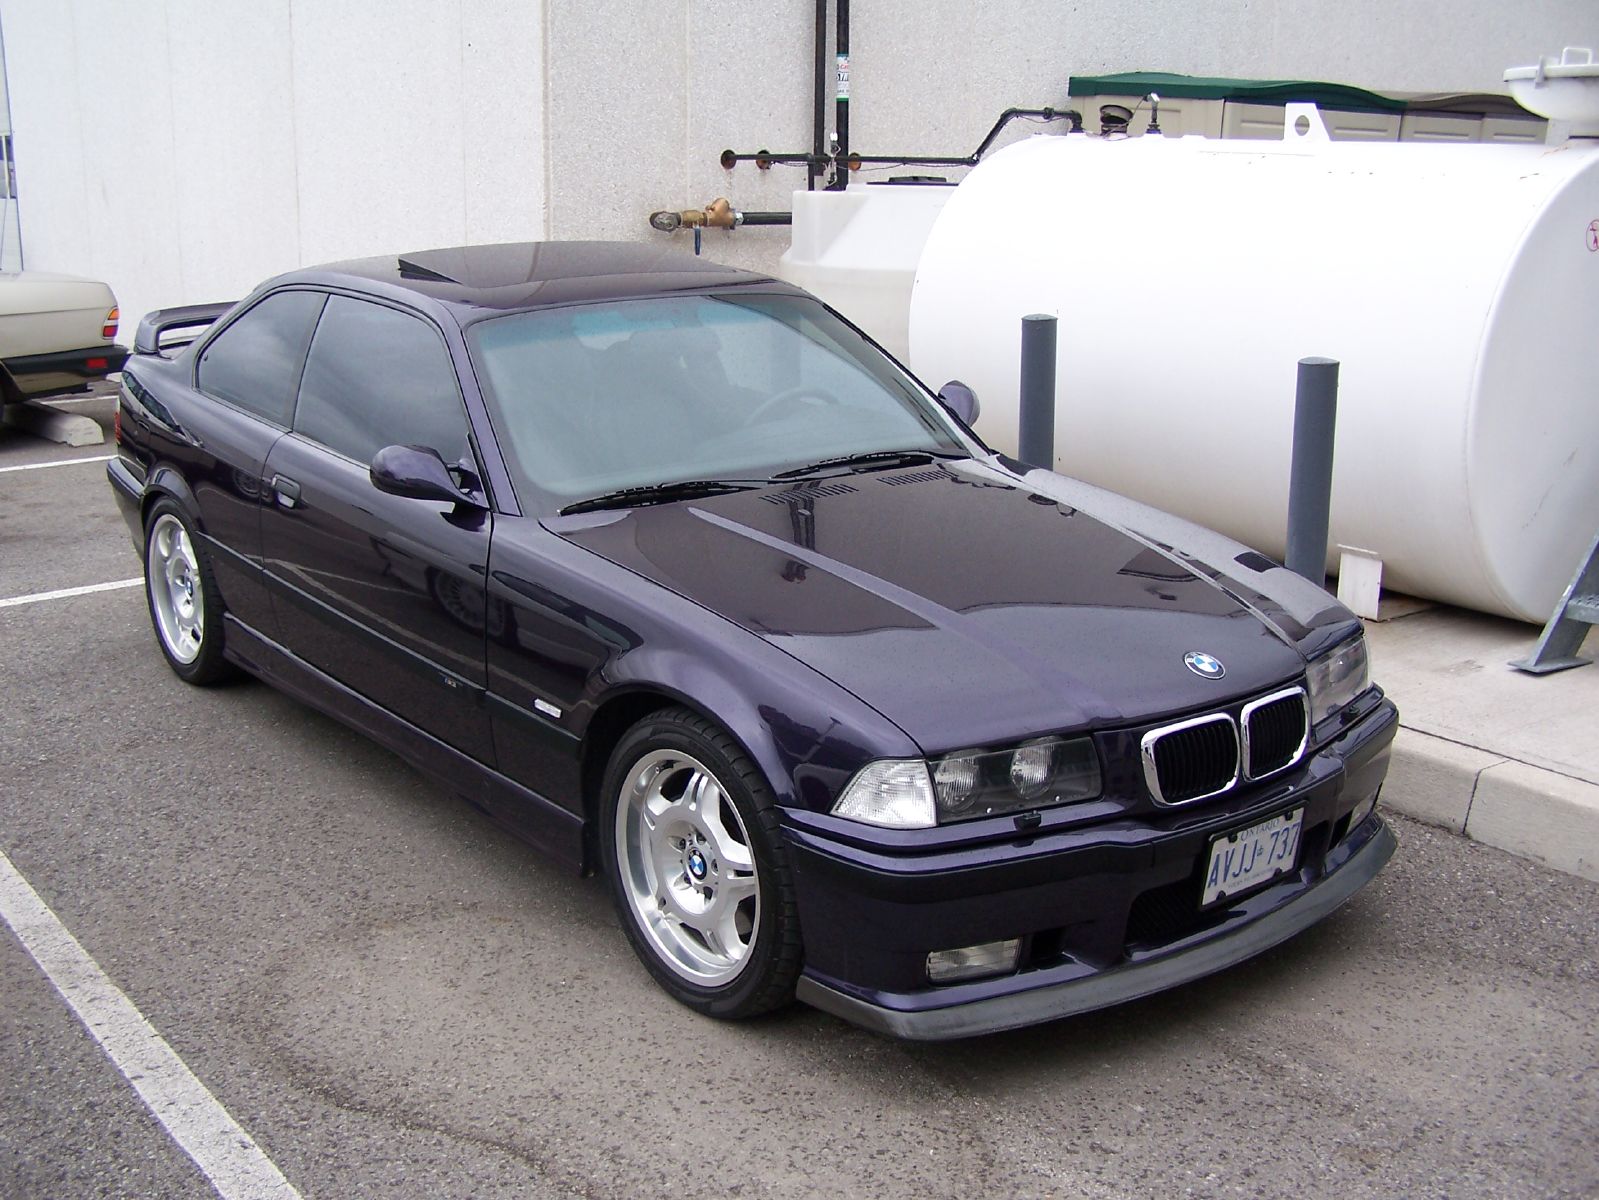 BMW 318iS 1997 photo - 10